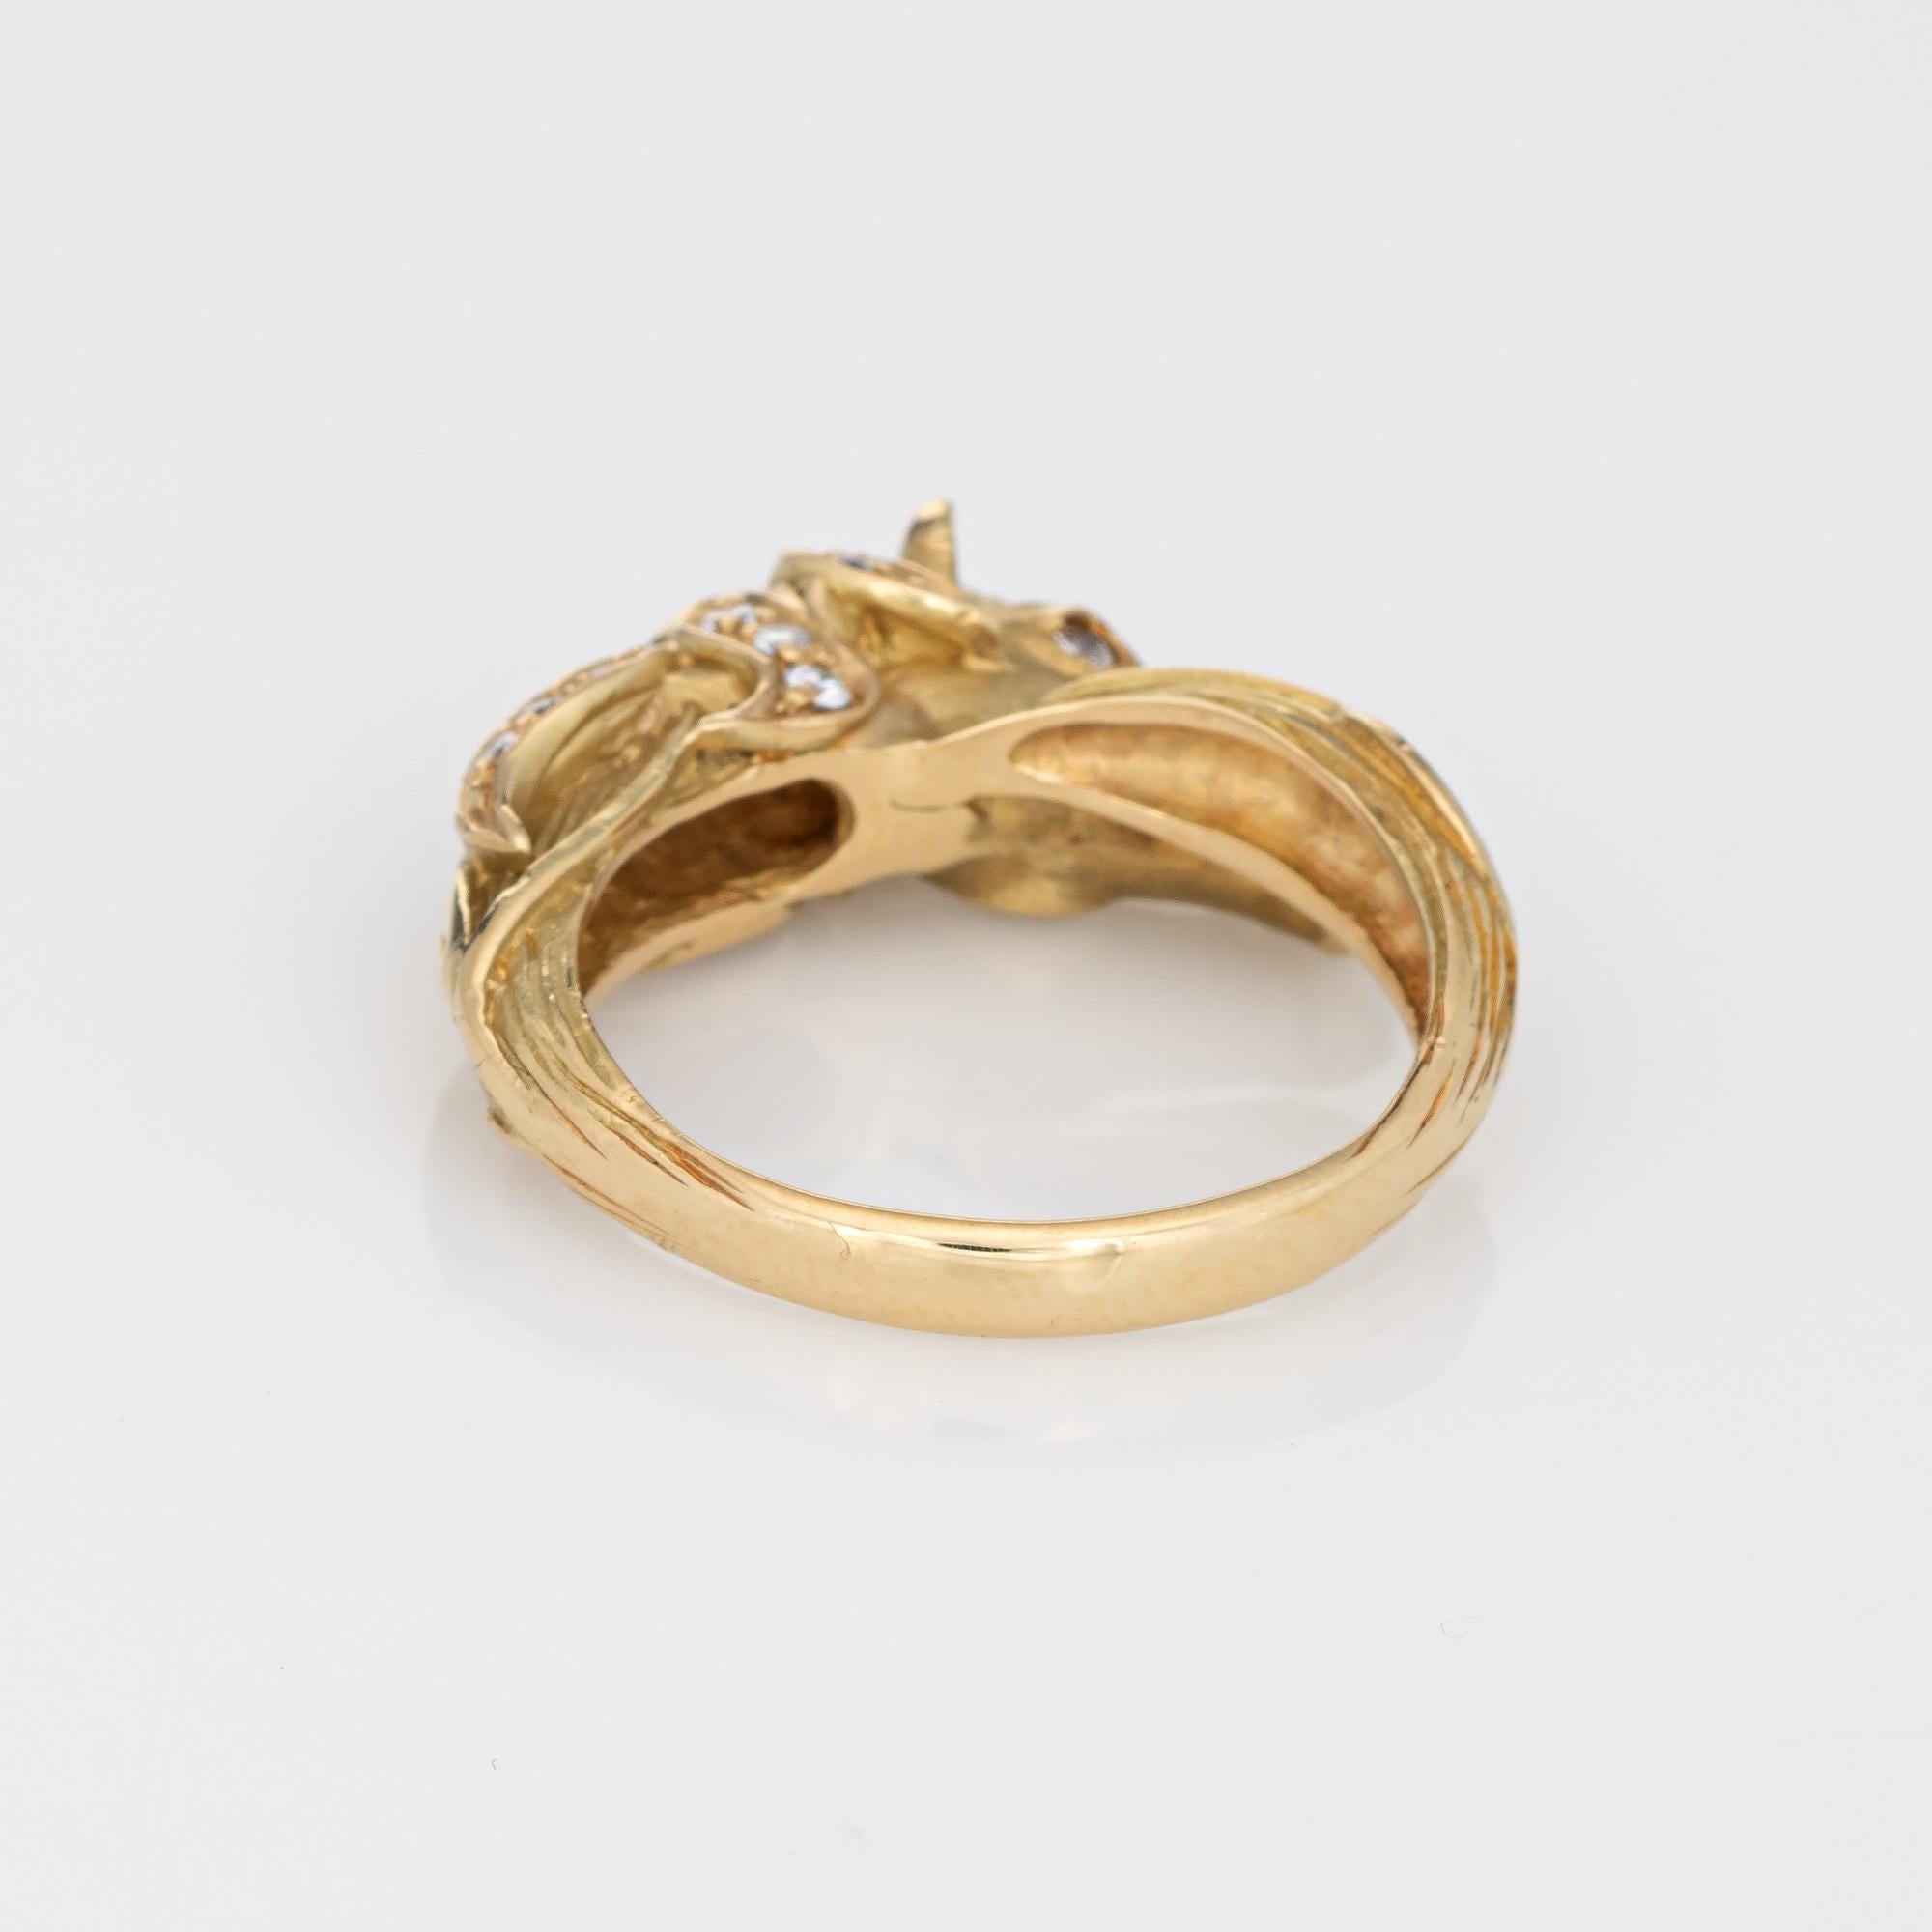 equestrian jewelry gold